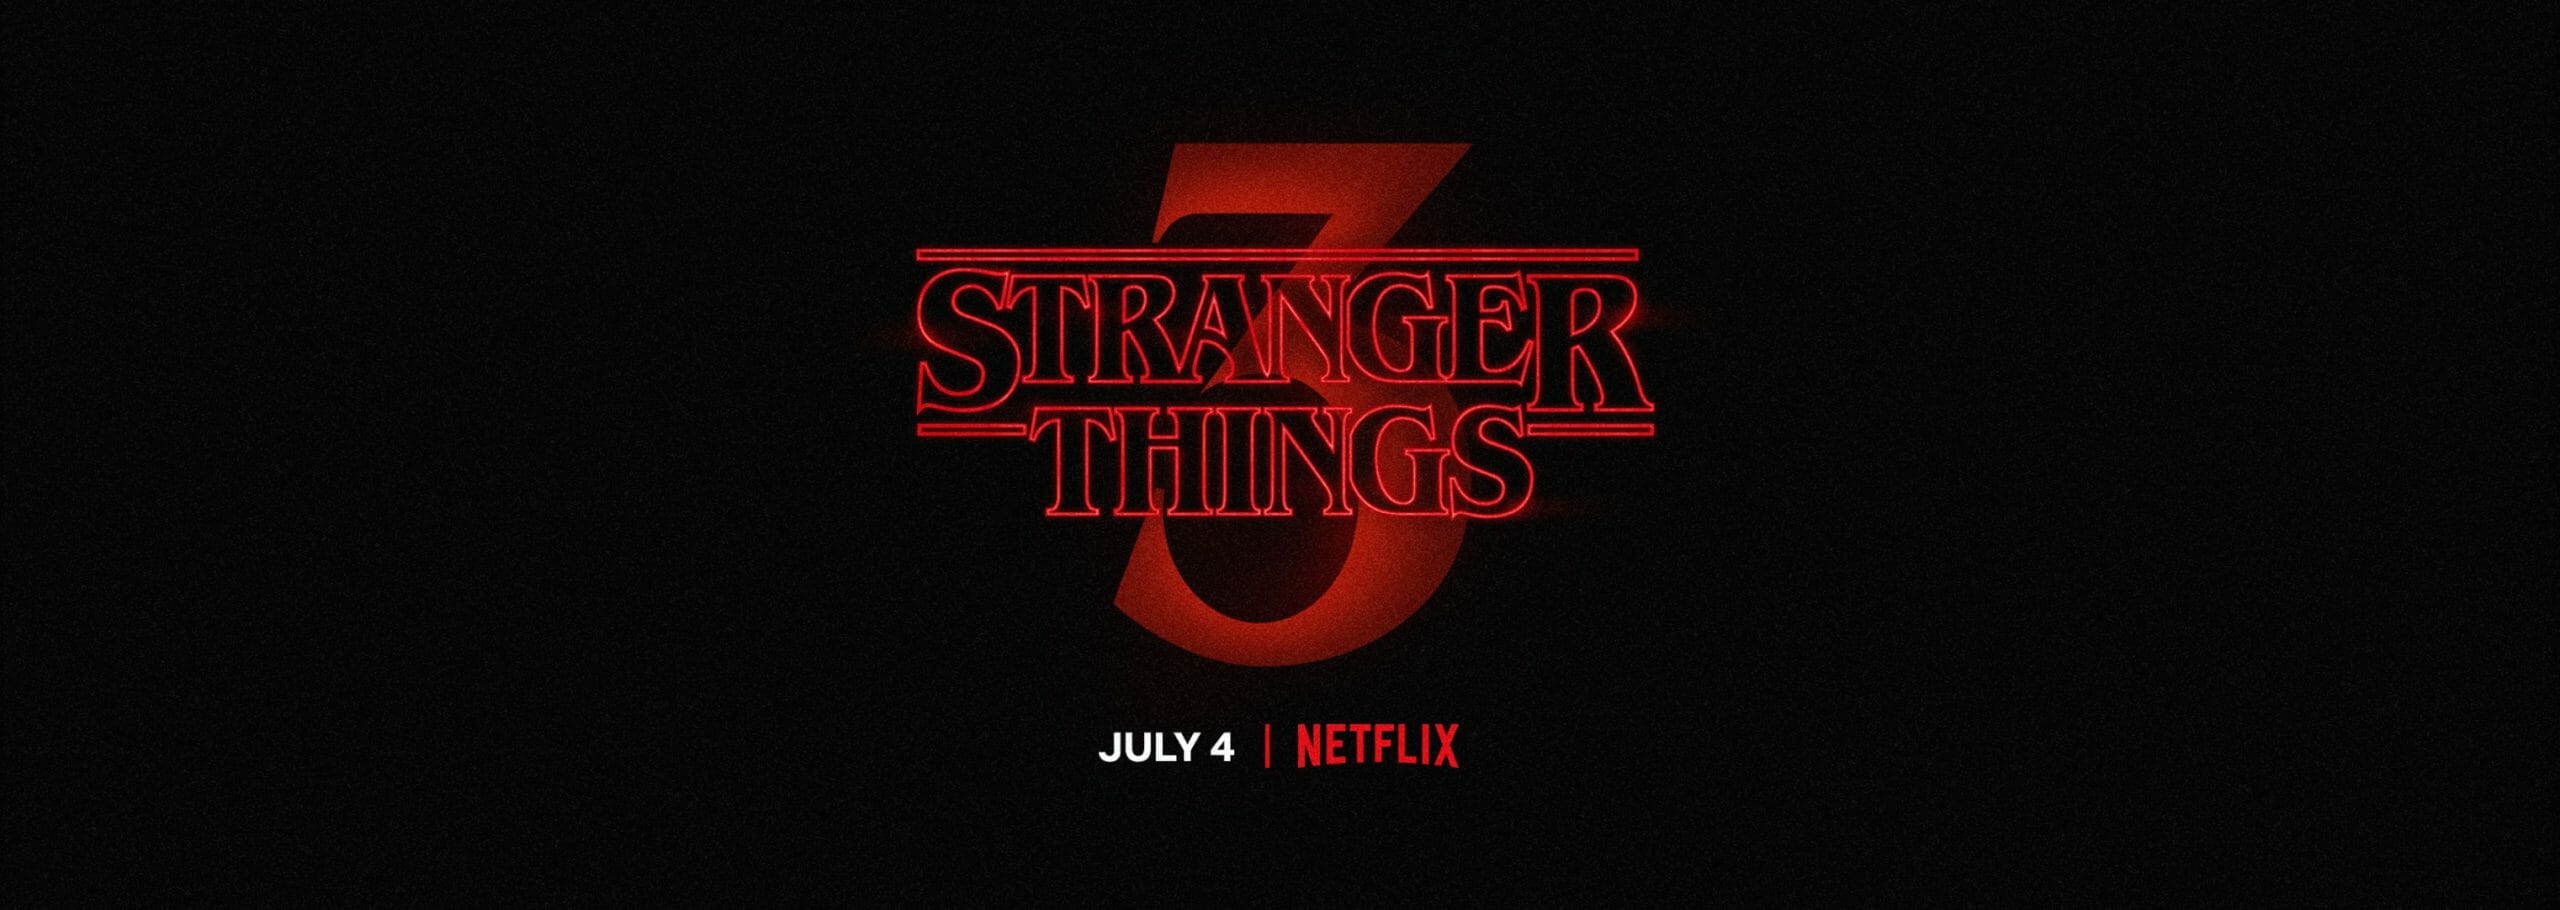 Stranger Things 3 Promotional Poster